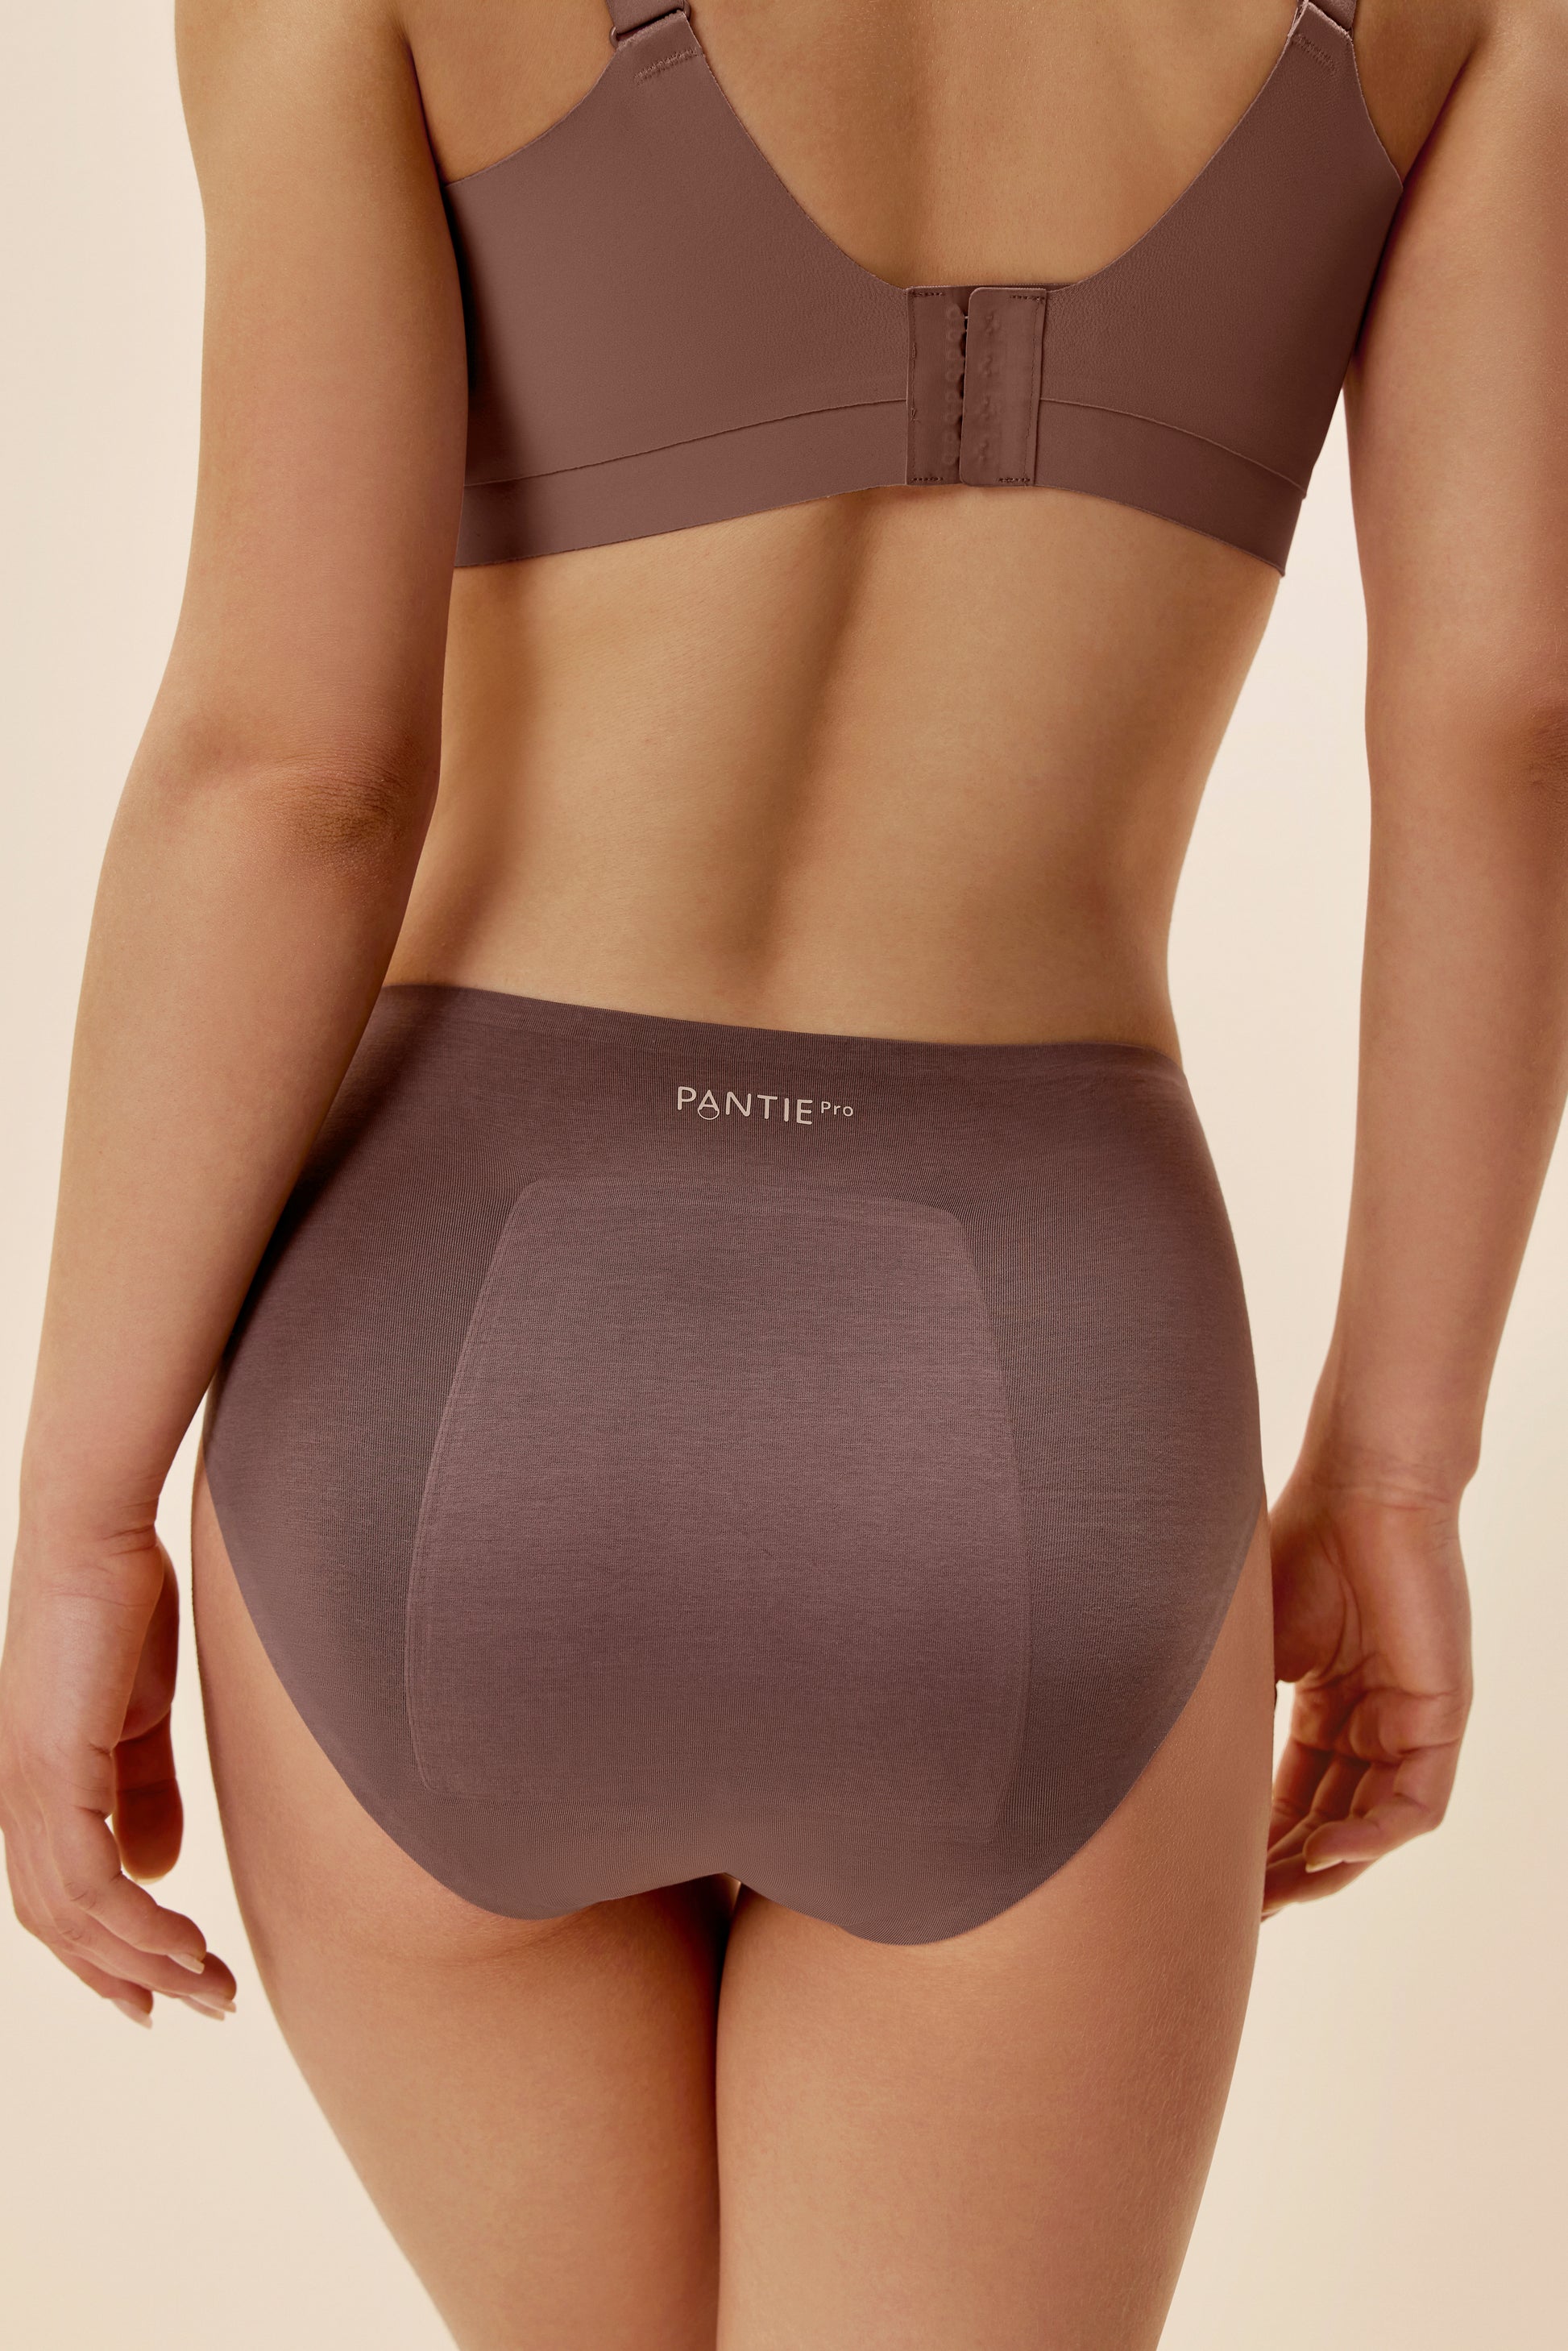 Triumph Women's High-Waist Cotton Panties - Leak-Proof Menstrual